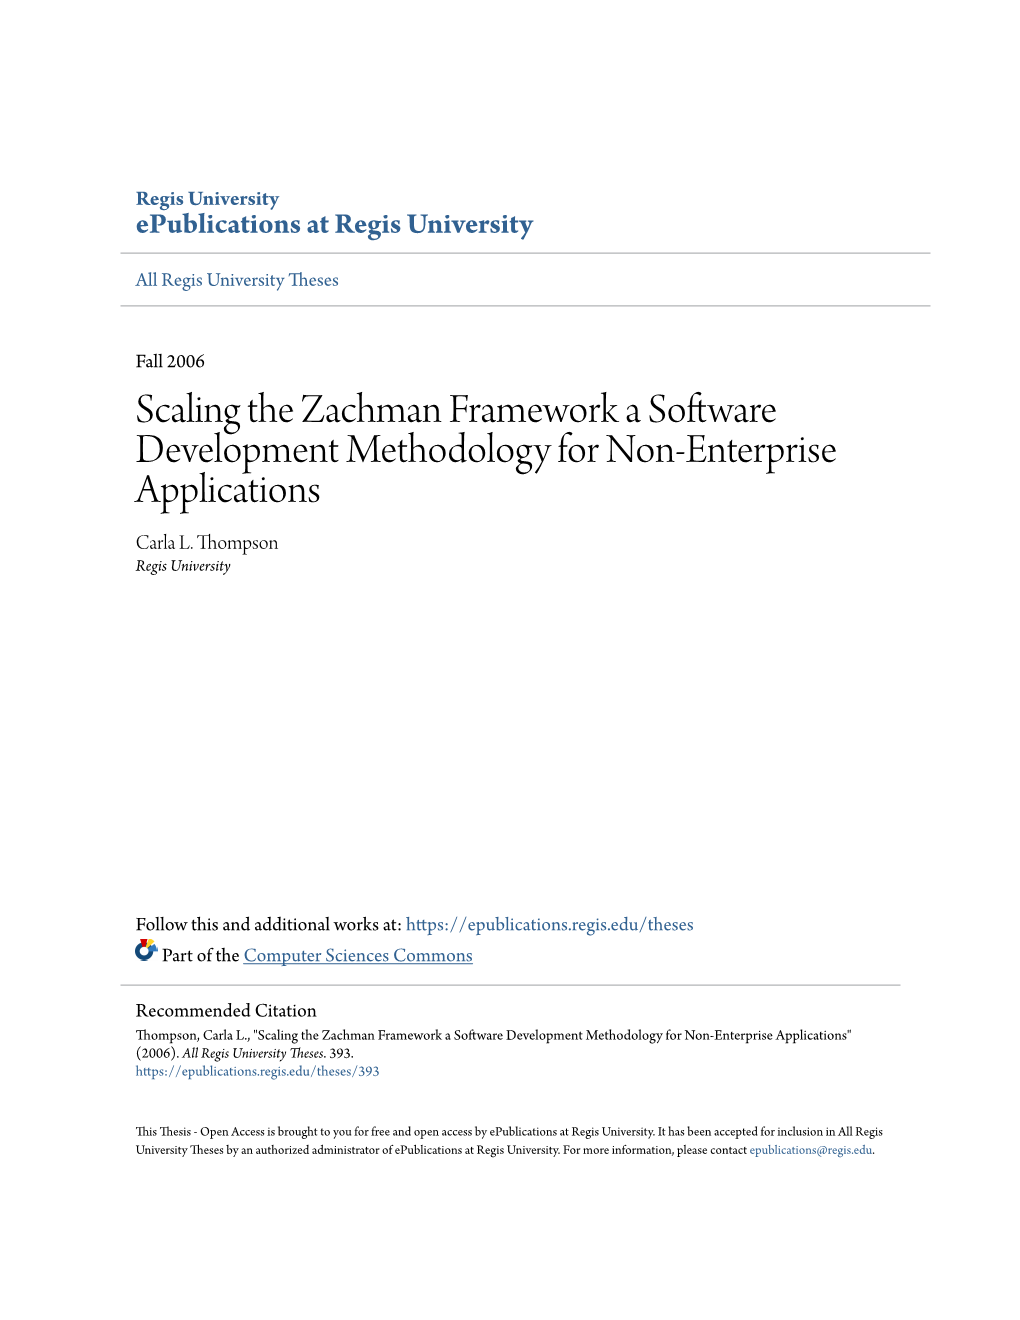 Scaling the Zachman Framework a Software Development Methodology for Non-Enterprise Applications Carla L